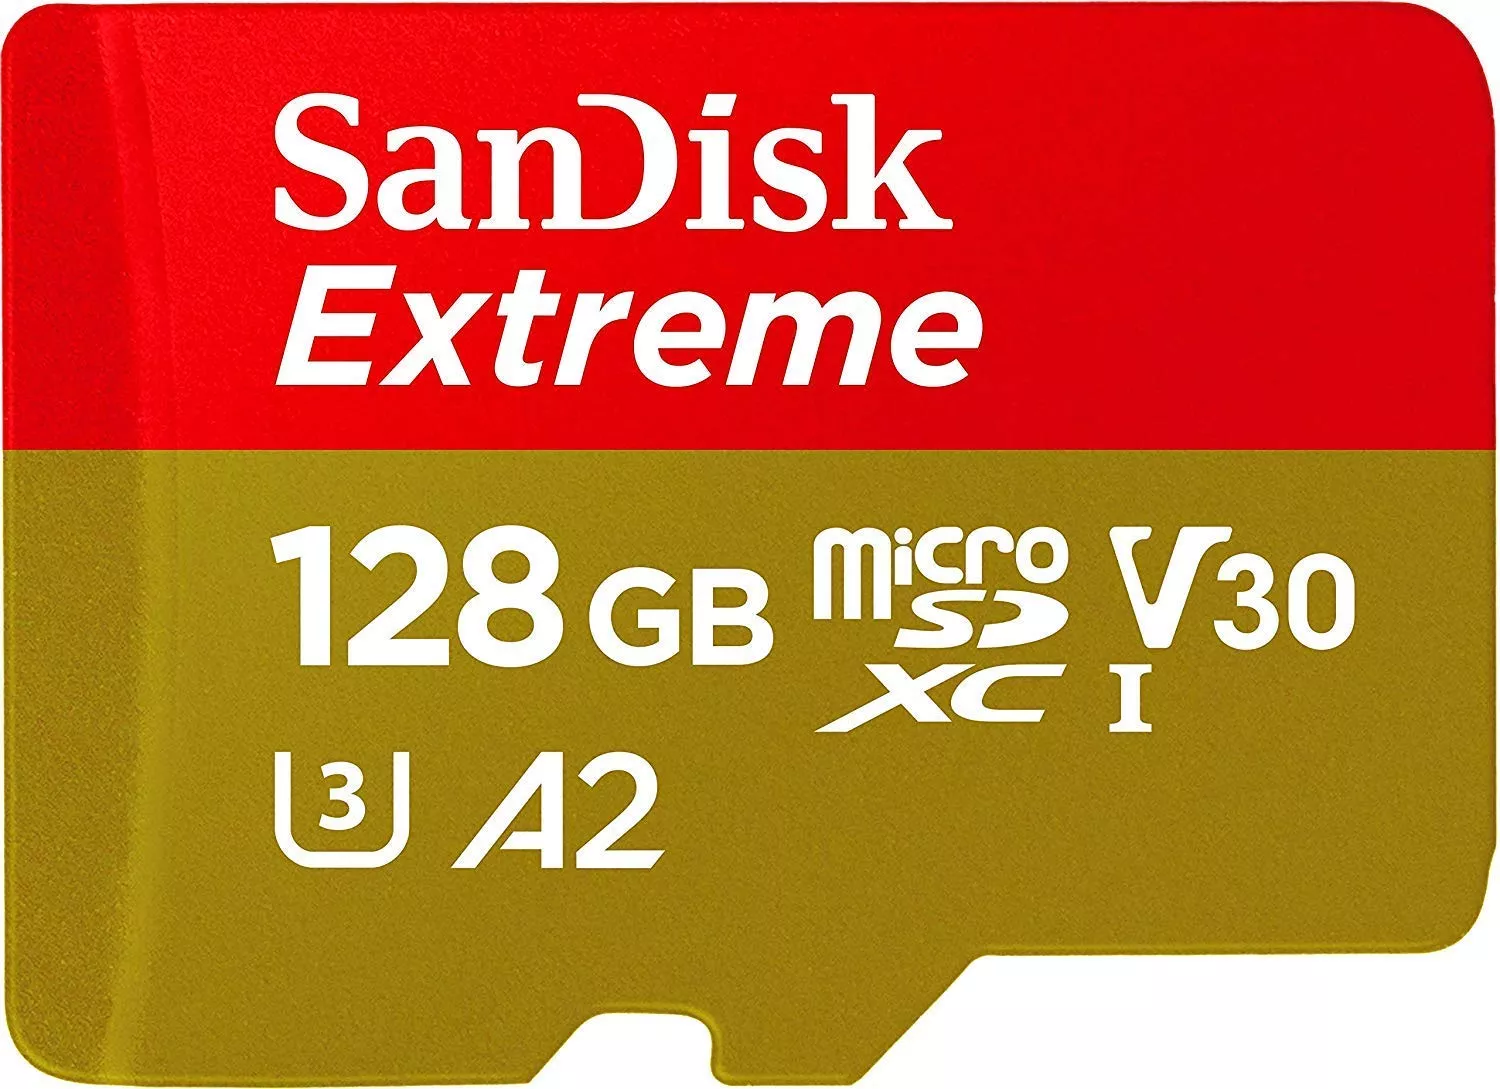 Sandisk SD Extreme